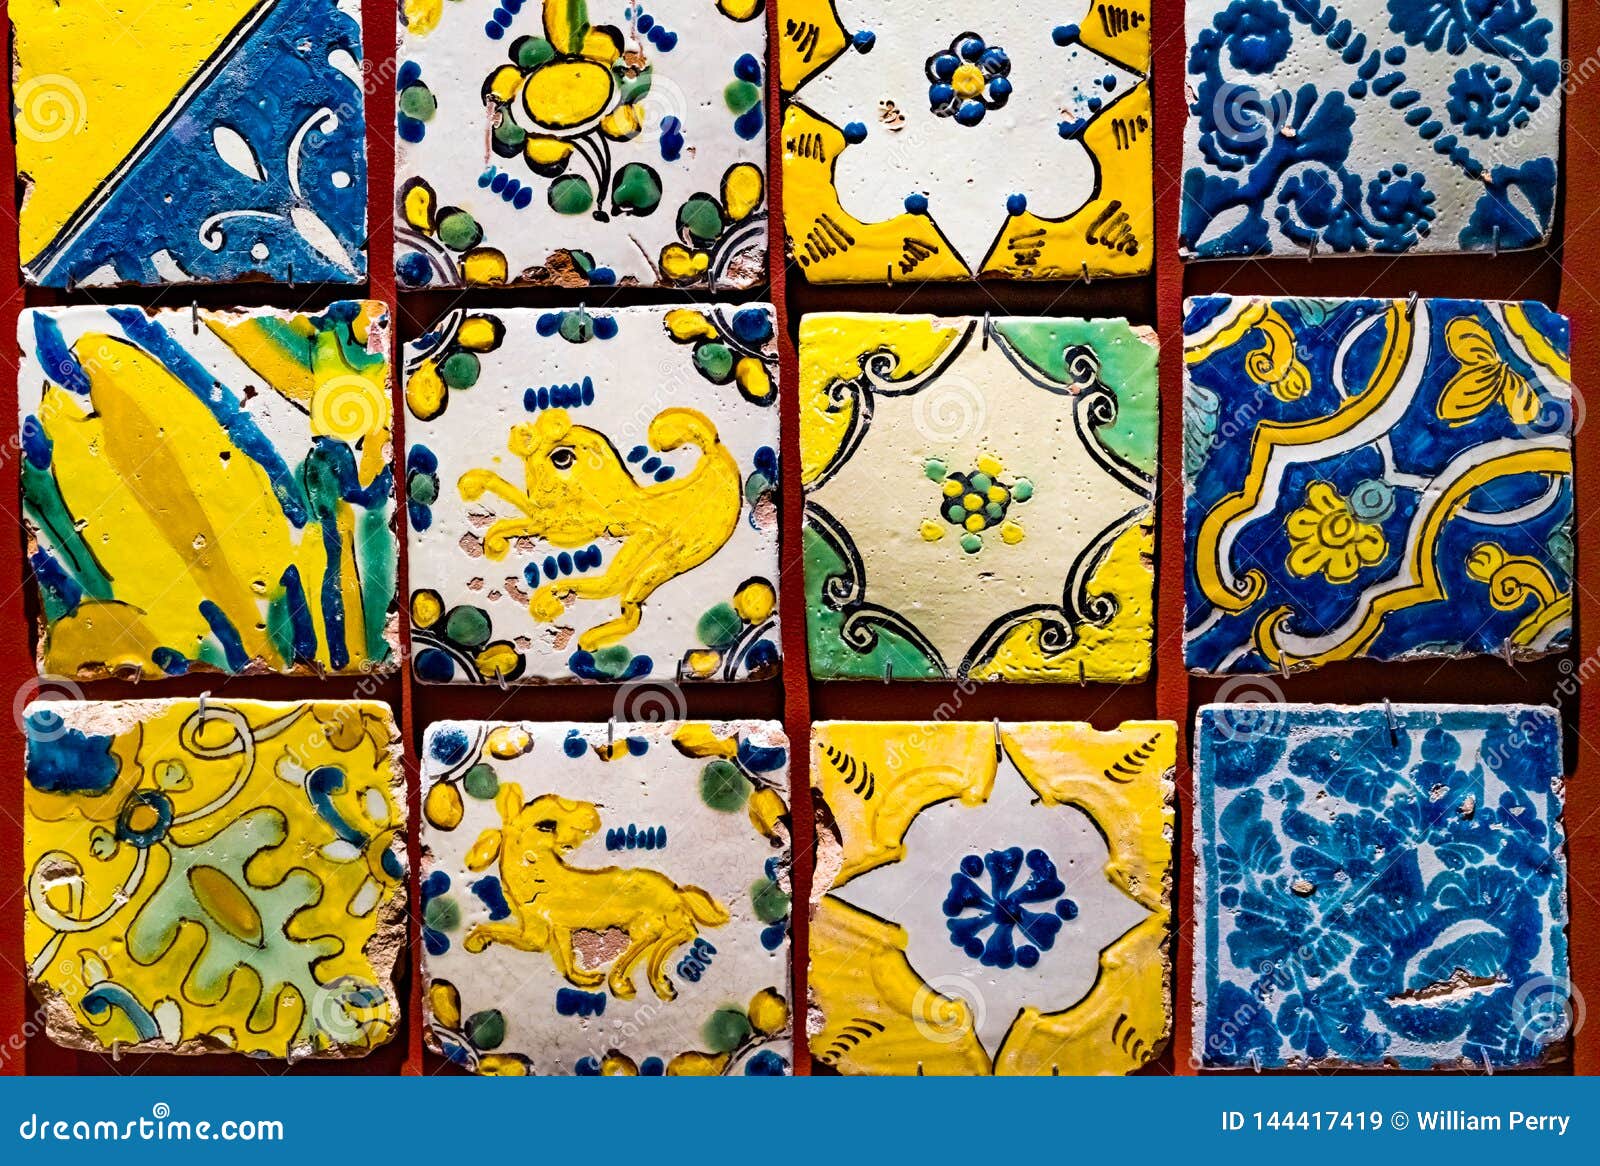 colorful spanish tiles templo mayor mexico city mexico